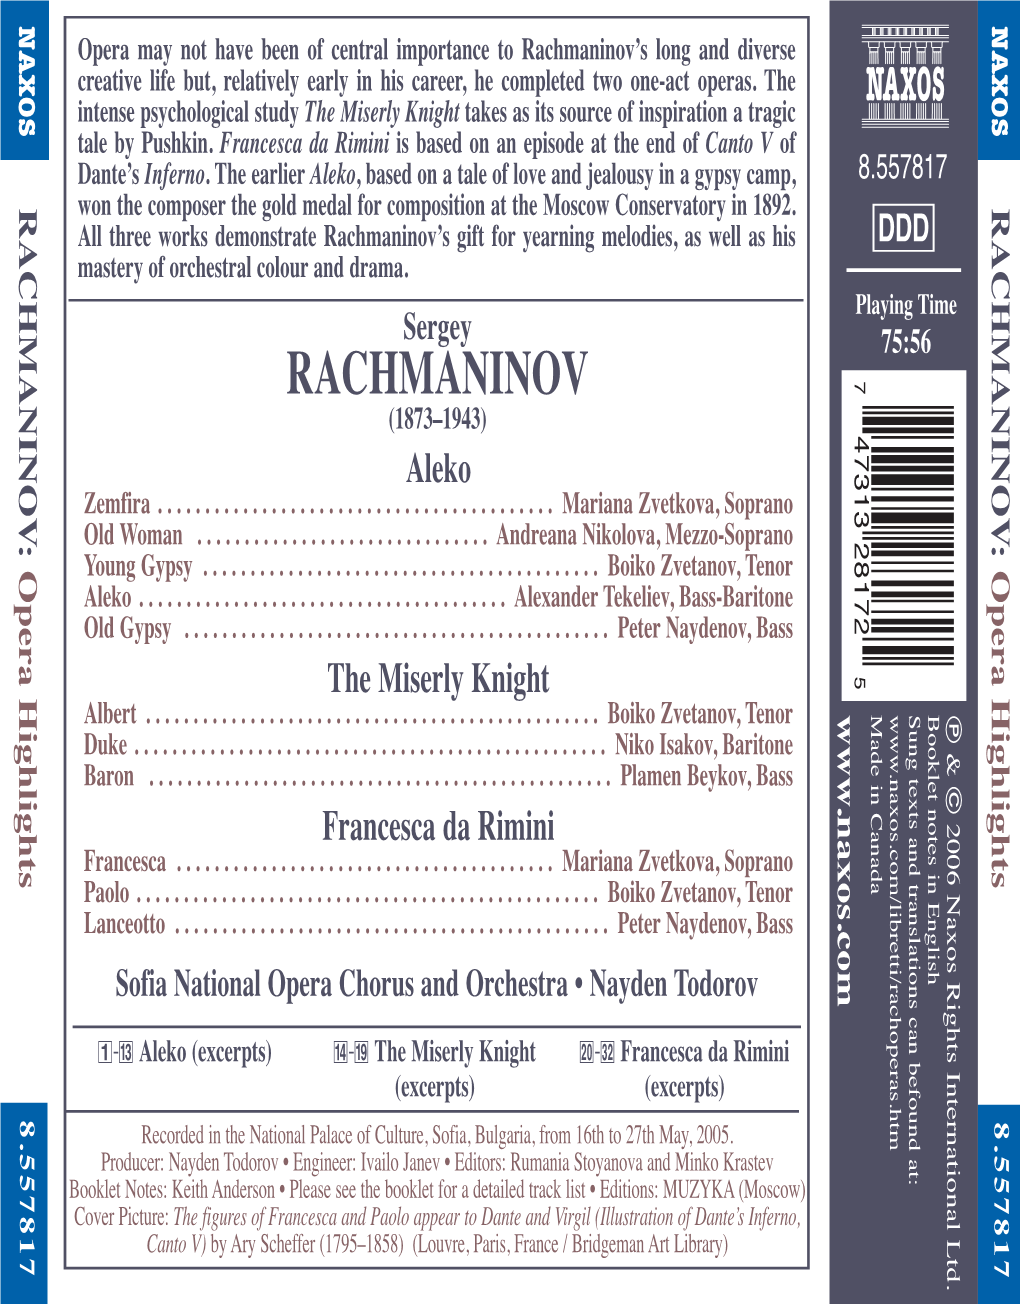 Rachmaninov US 14/6/06 8:47 Pm Page 1